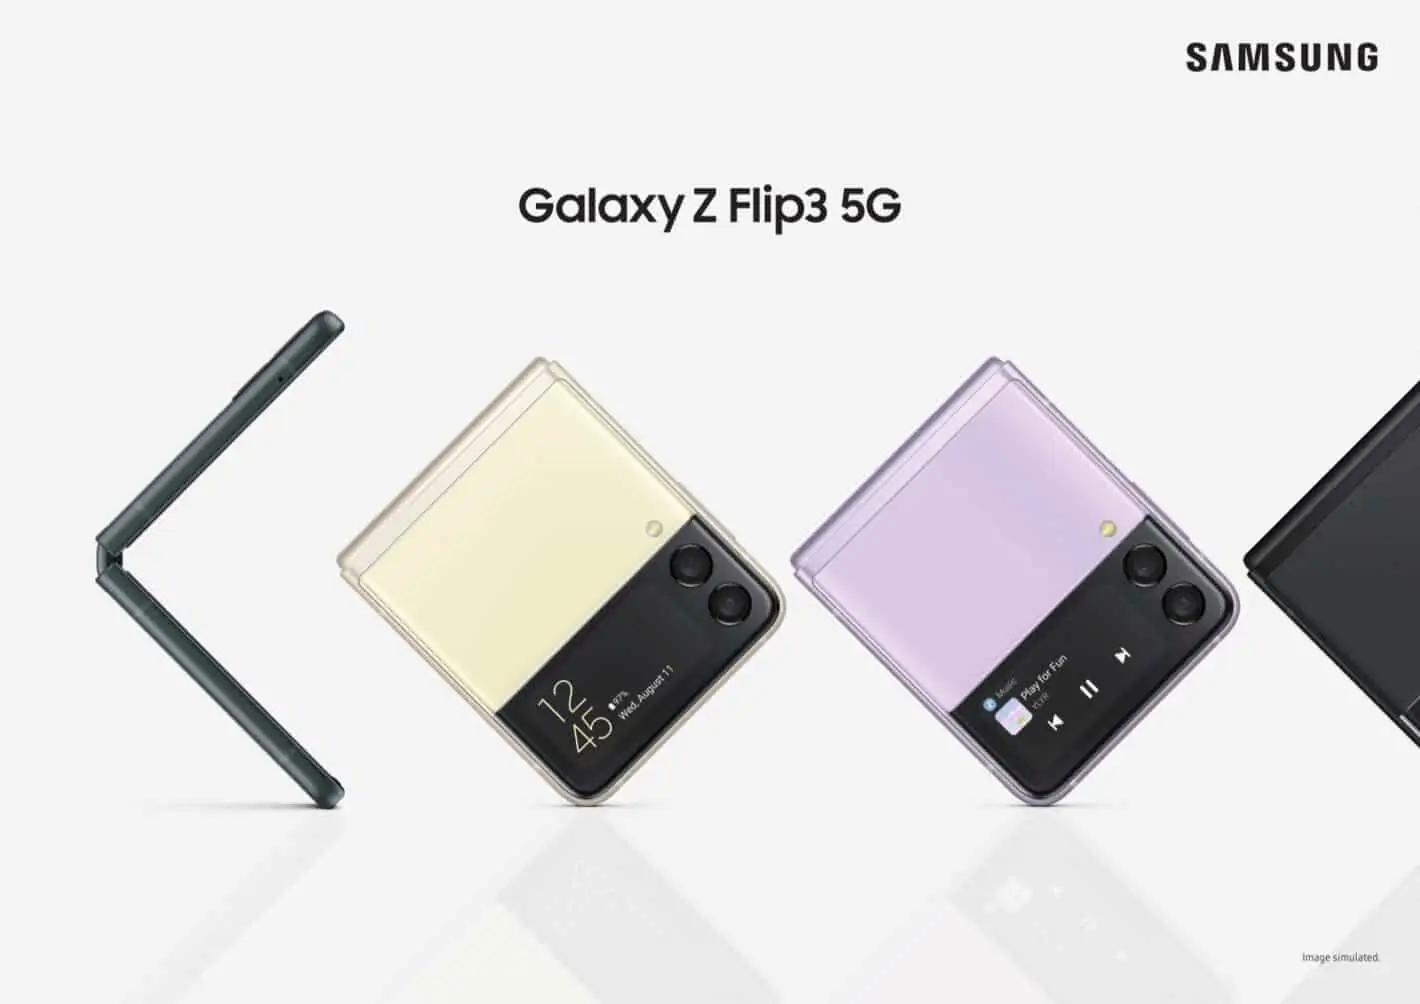 Google Fi full service plan subscribers can get eye catching discount deals for Samsung Galaxy Z Flip 3